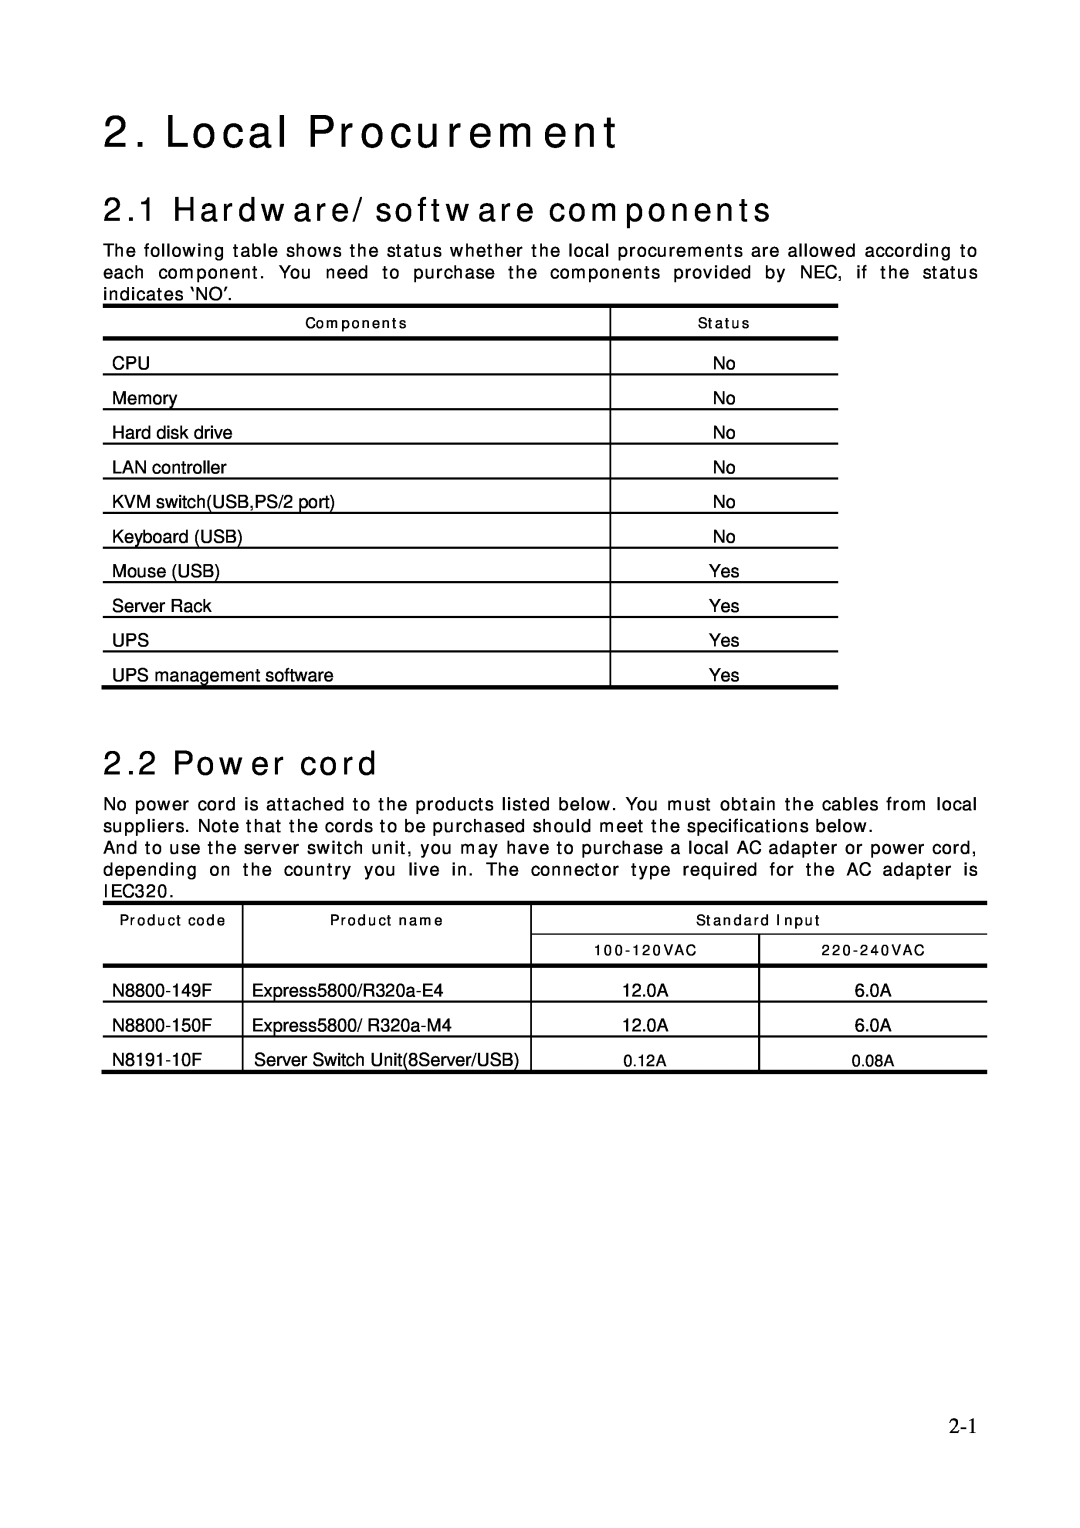 NEC R320A-E4 manual Hardware/software components, Power cord, Local Procurement 